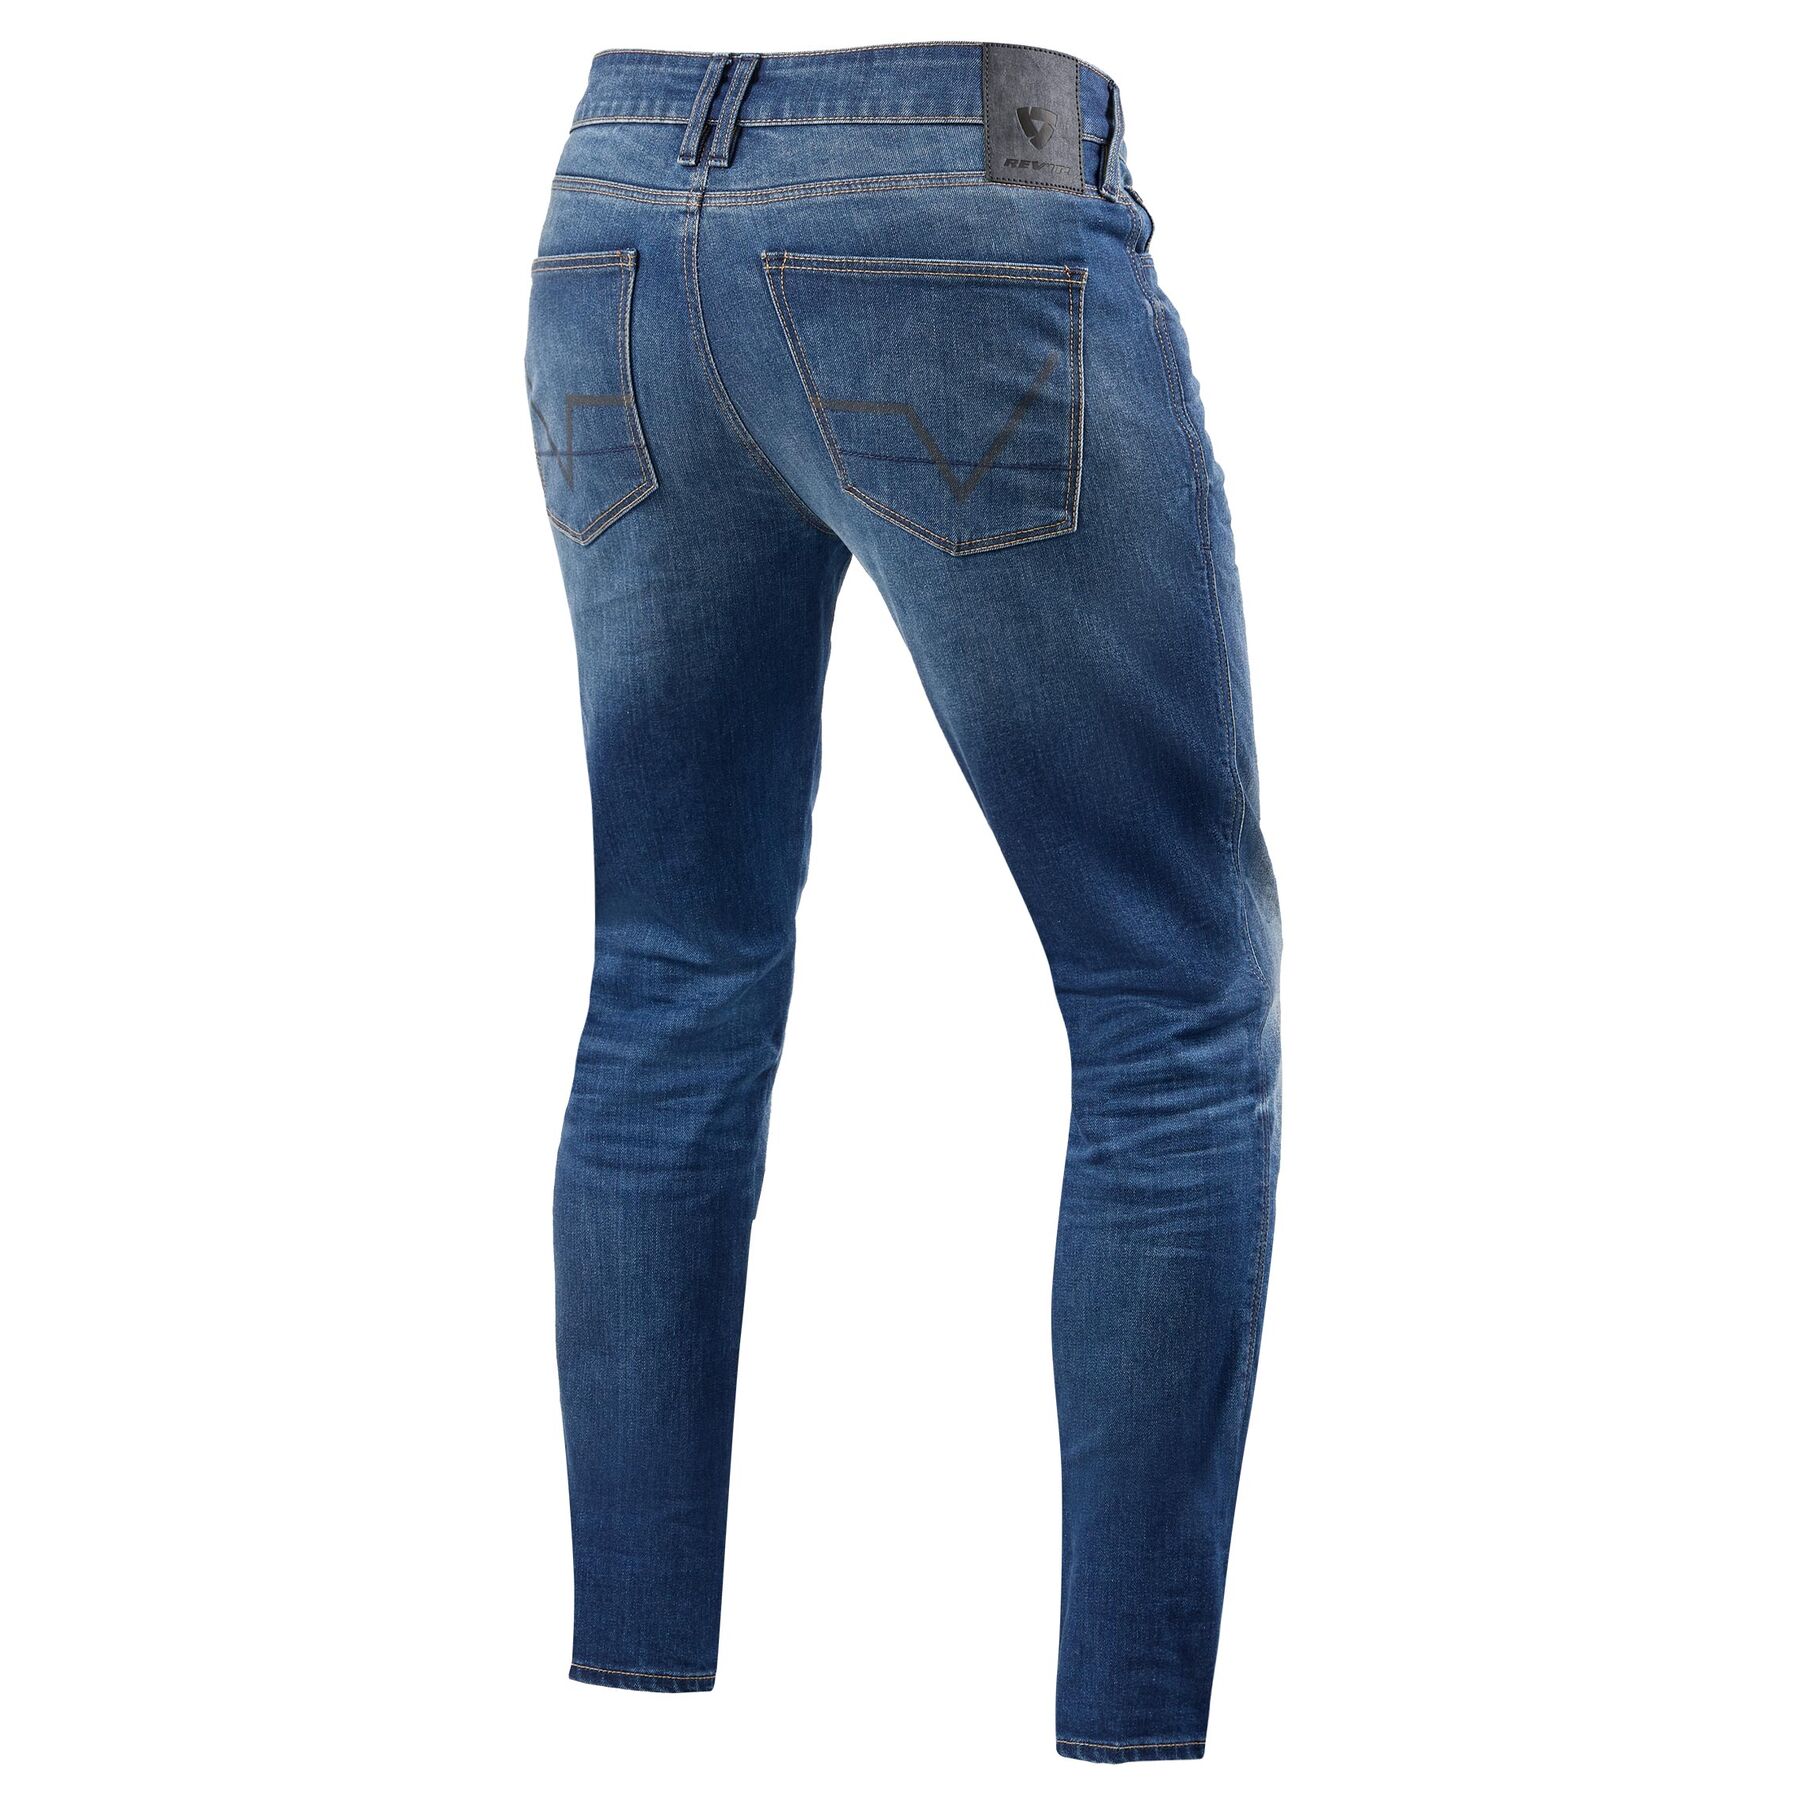 Rev'it! Carlin SK Jeans, Length 34 - Medium Blue Pants